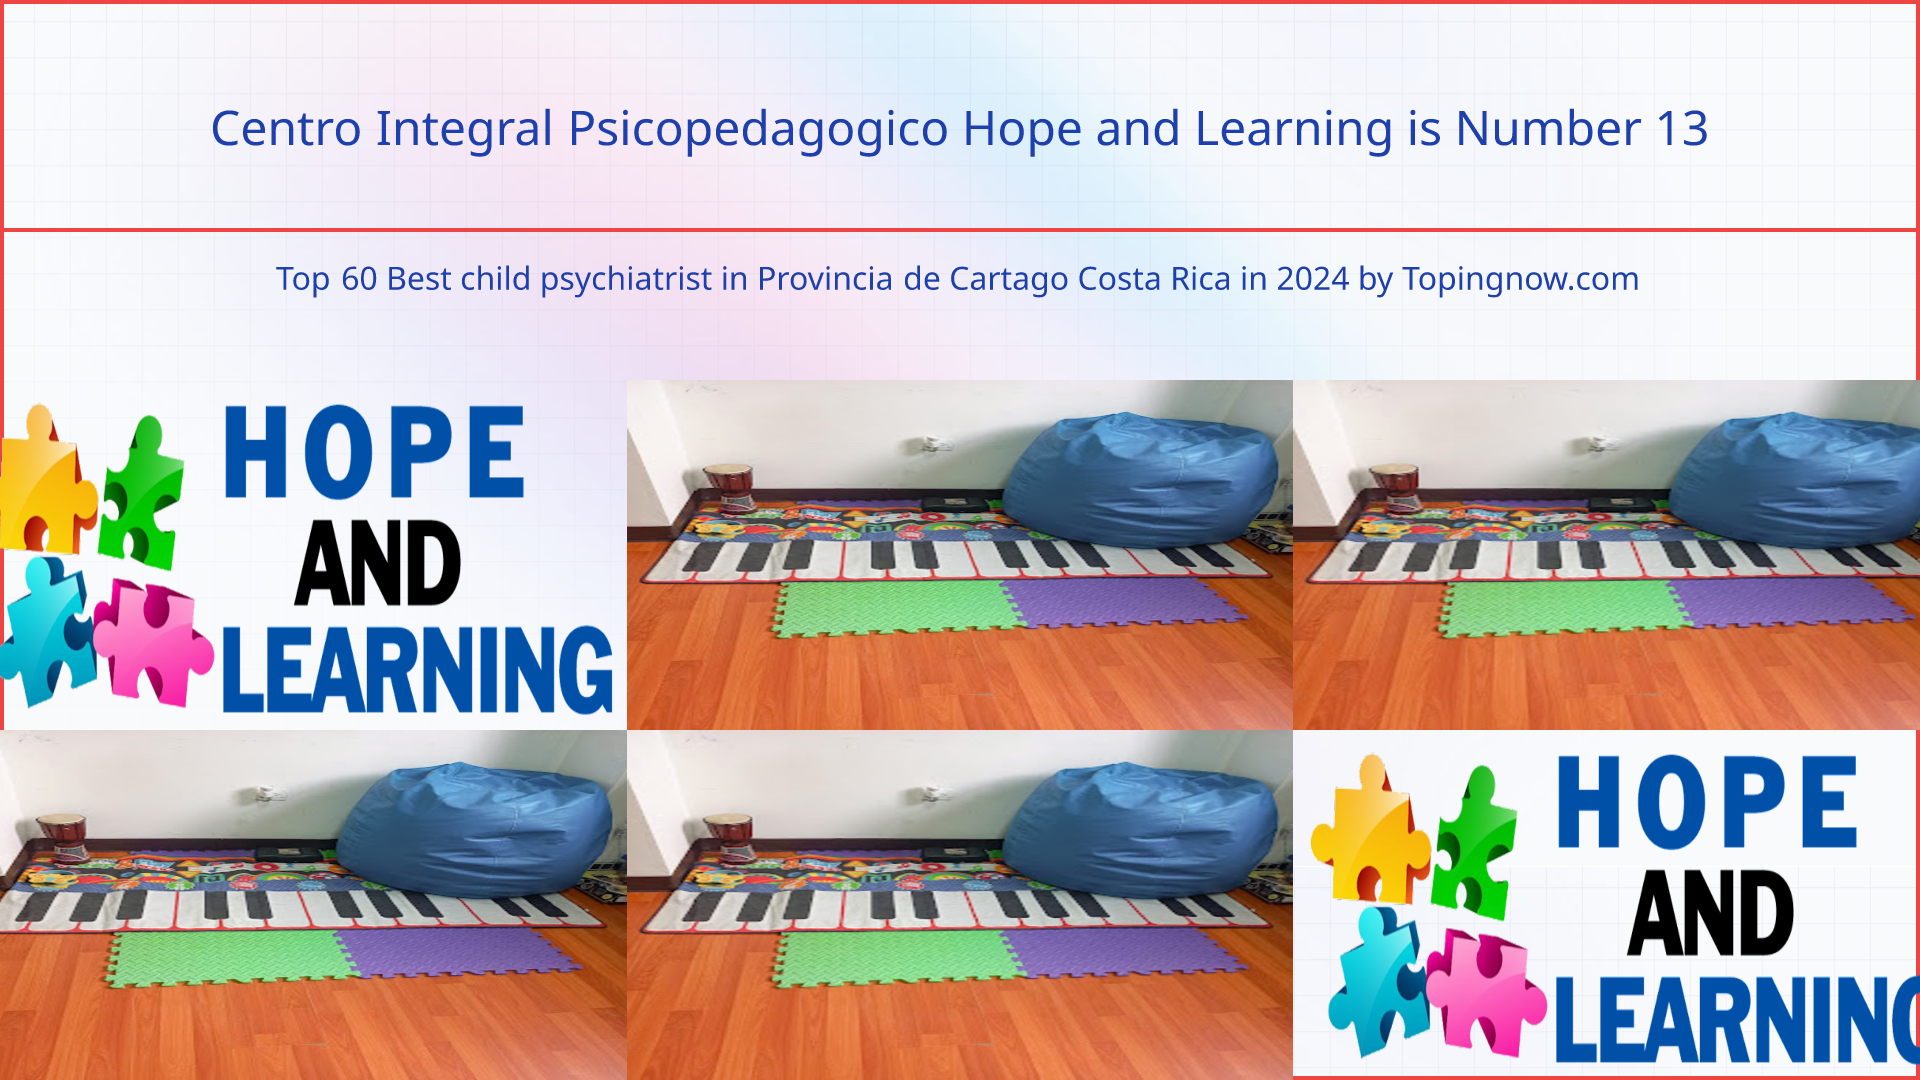 Centro Integral Psicopedagogico Hope and Learning: Top 60 Best child psychiatrist in Provincia de Cartago Costa Rica in 2024